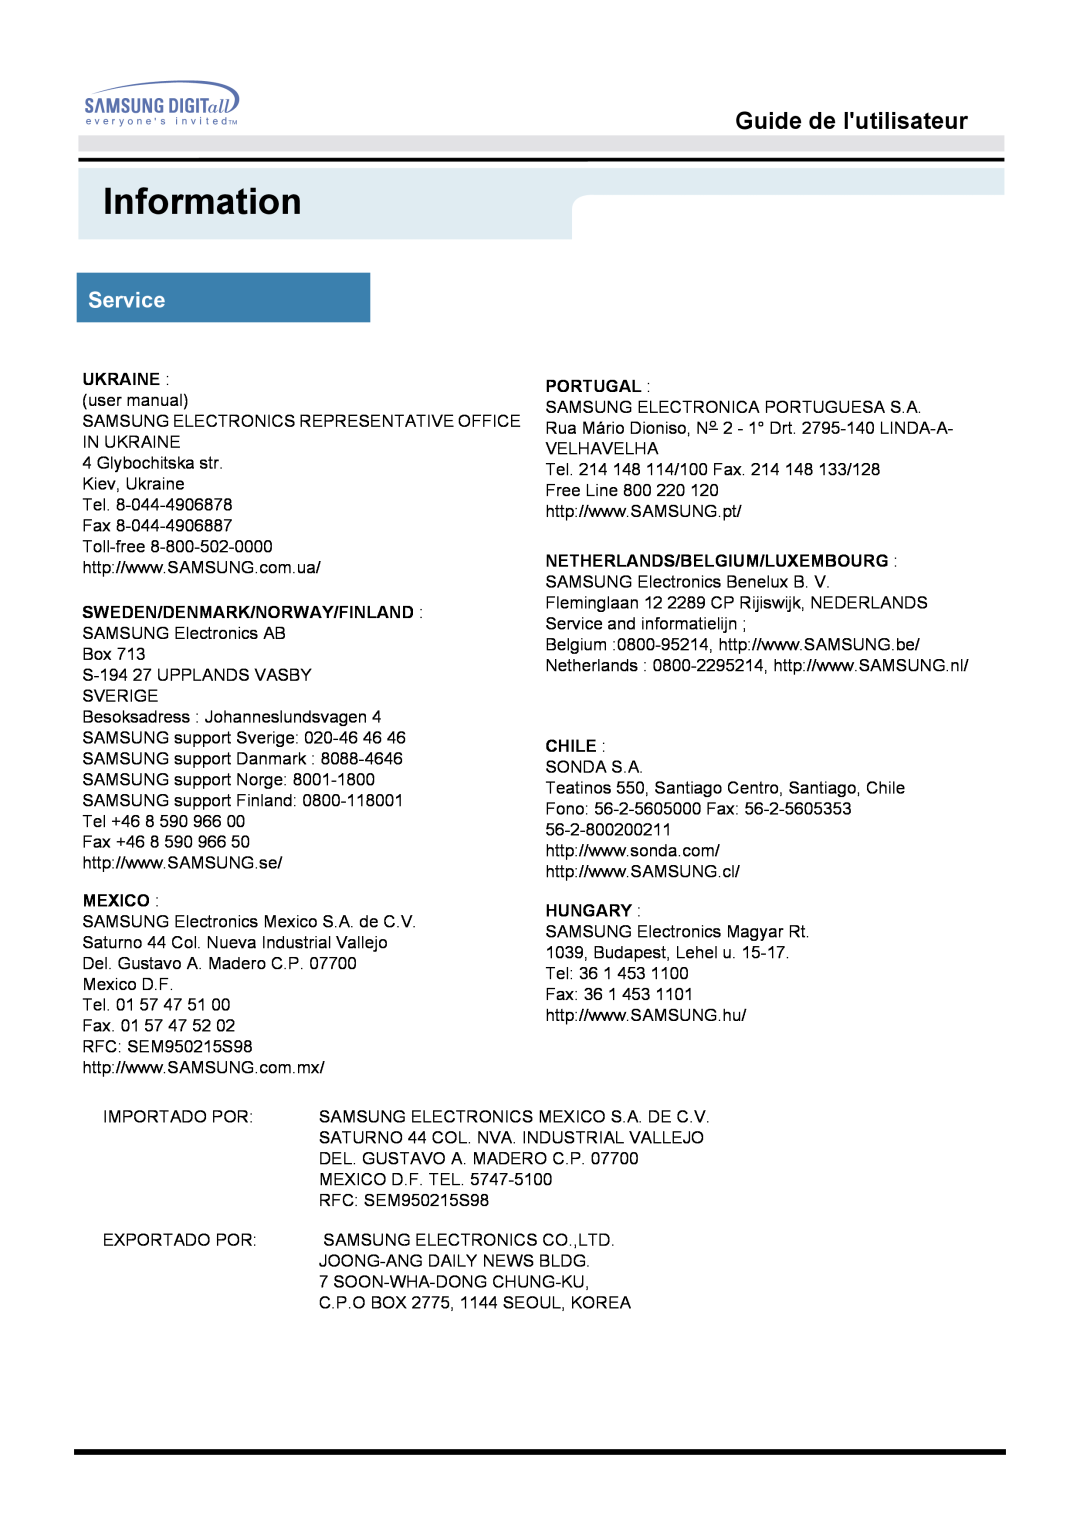 Samsung GG15MSAN/EDC Information, Guide de lutilisateur, Service, UKRAINE user manual, Sweden/Denmark/Norway/Finland 